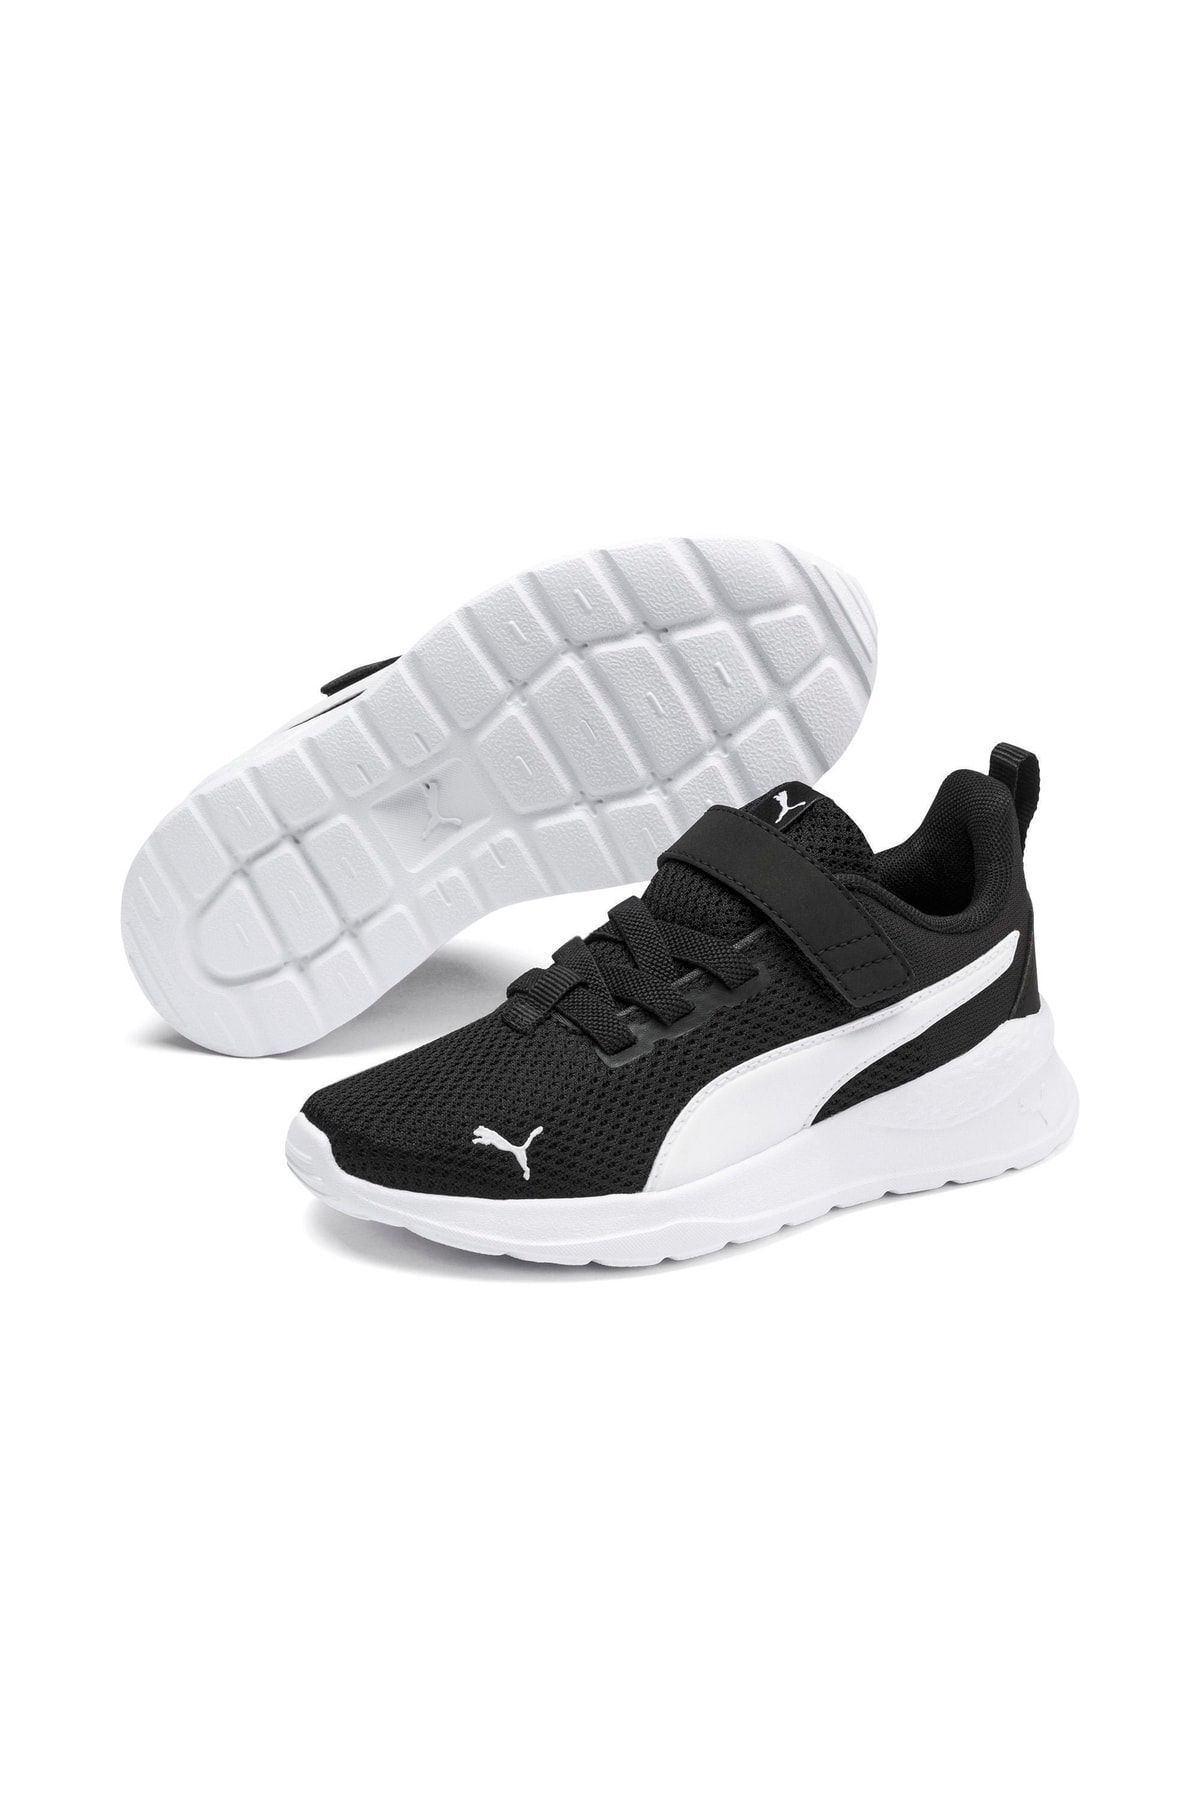 Puma 37200901 Anzarun Lite Ac Ps Black-white Çocuk Spor Ayakkabı/siyah Beyaz/33 Numar